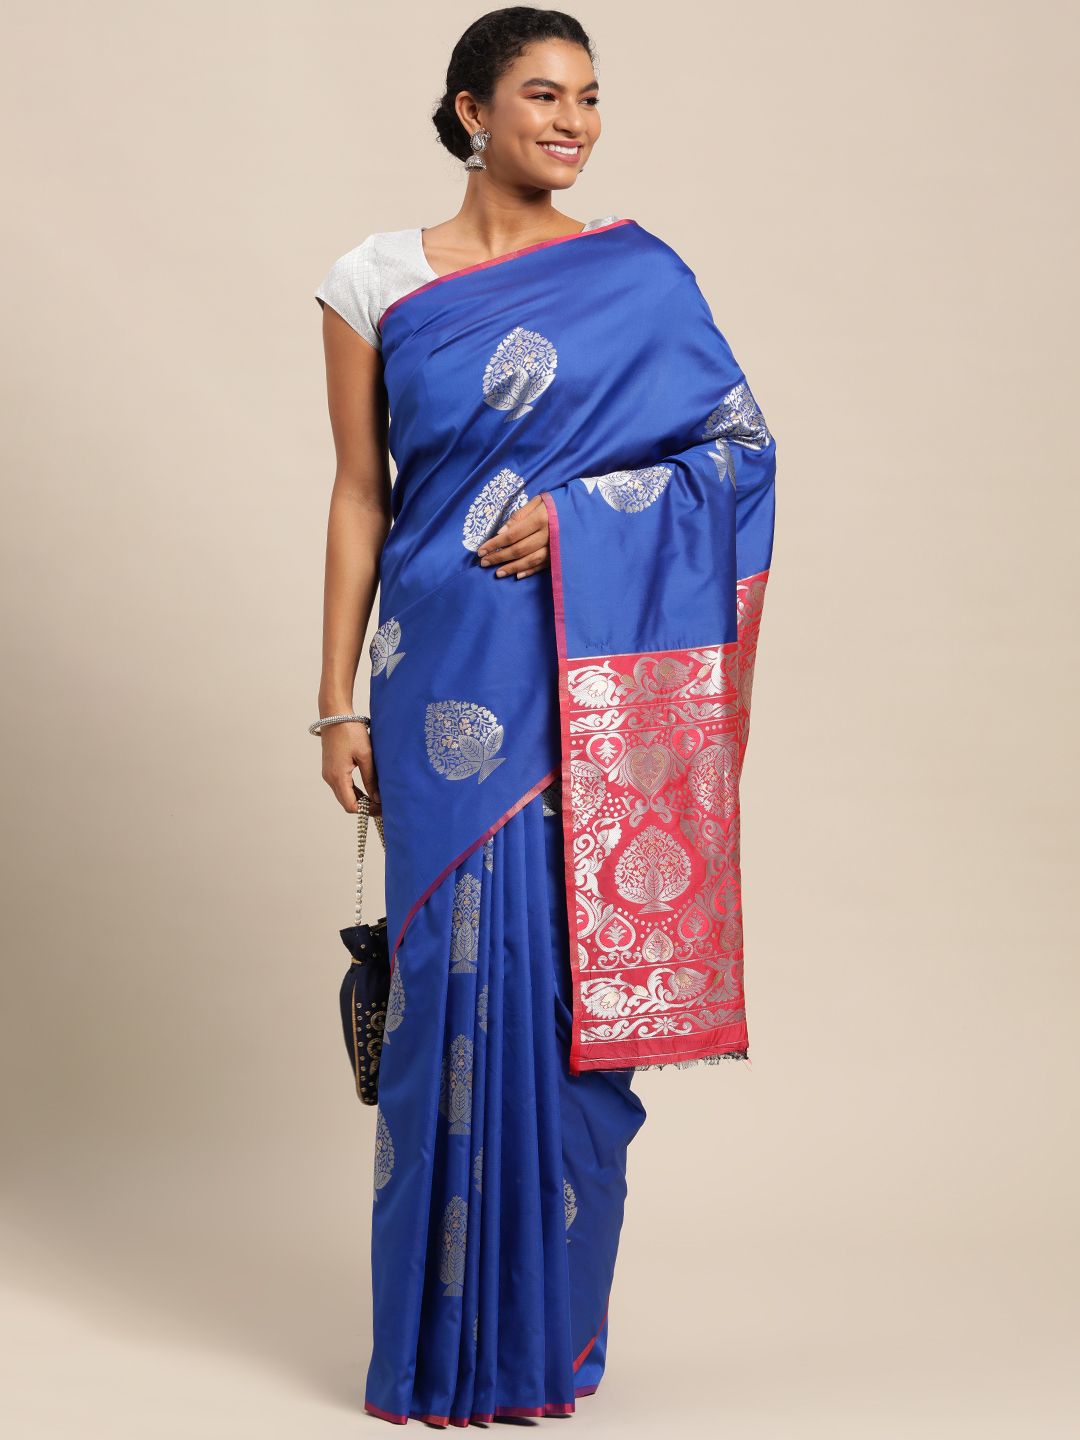 Royal blue color New Look bollywood Banarasi silk saree